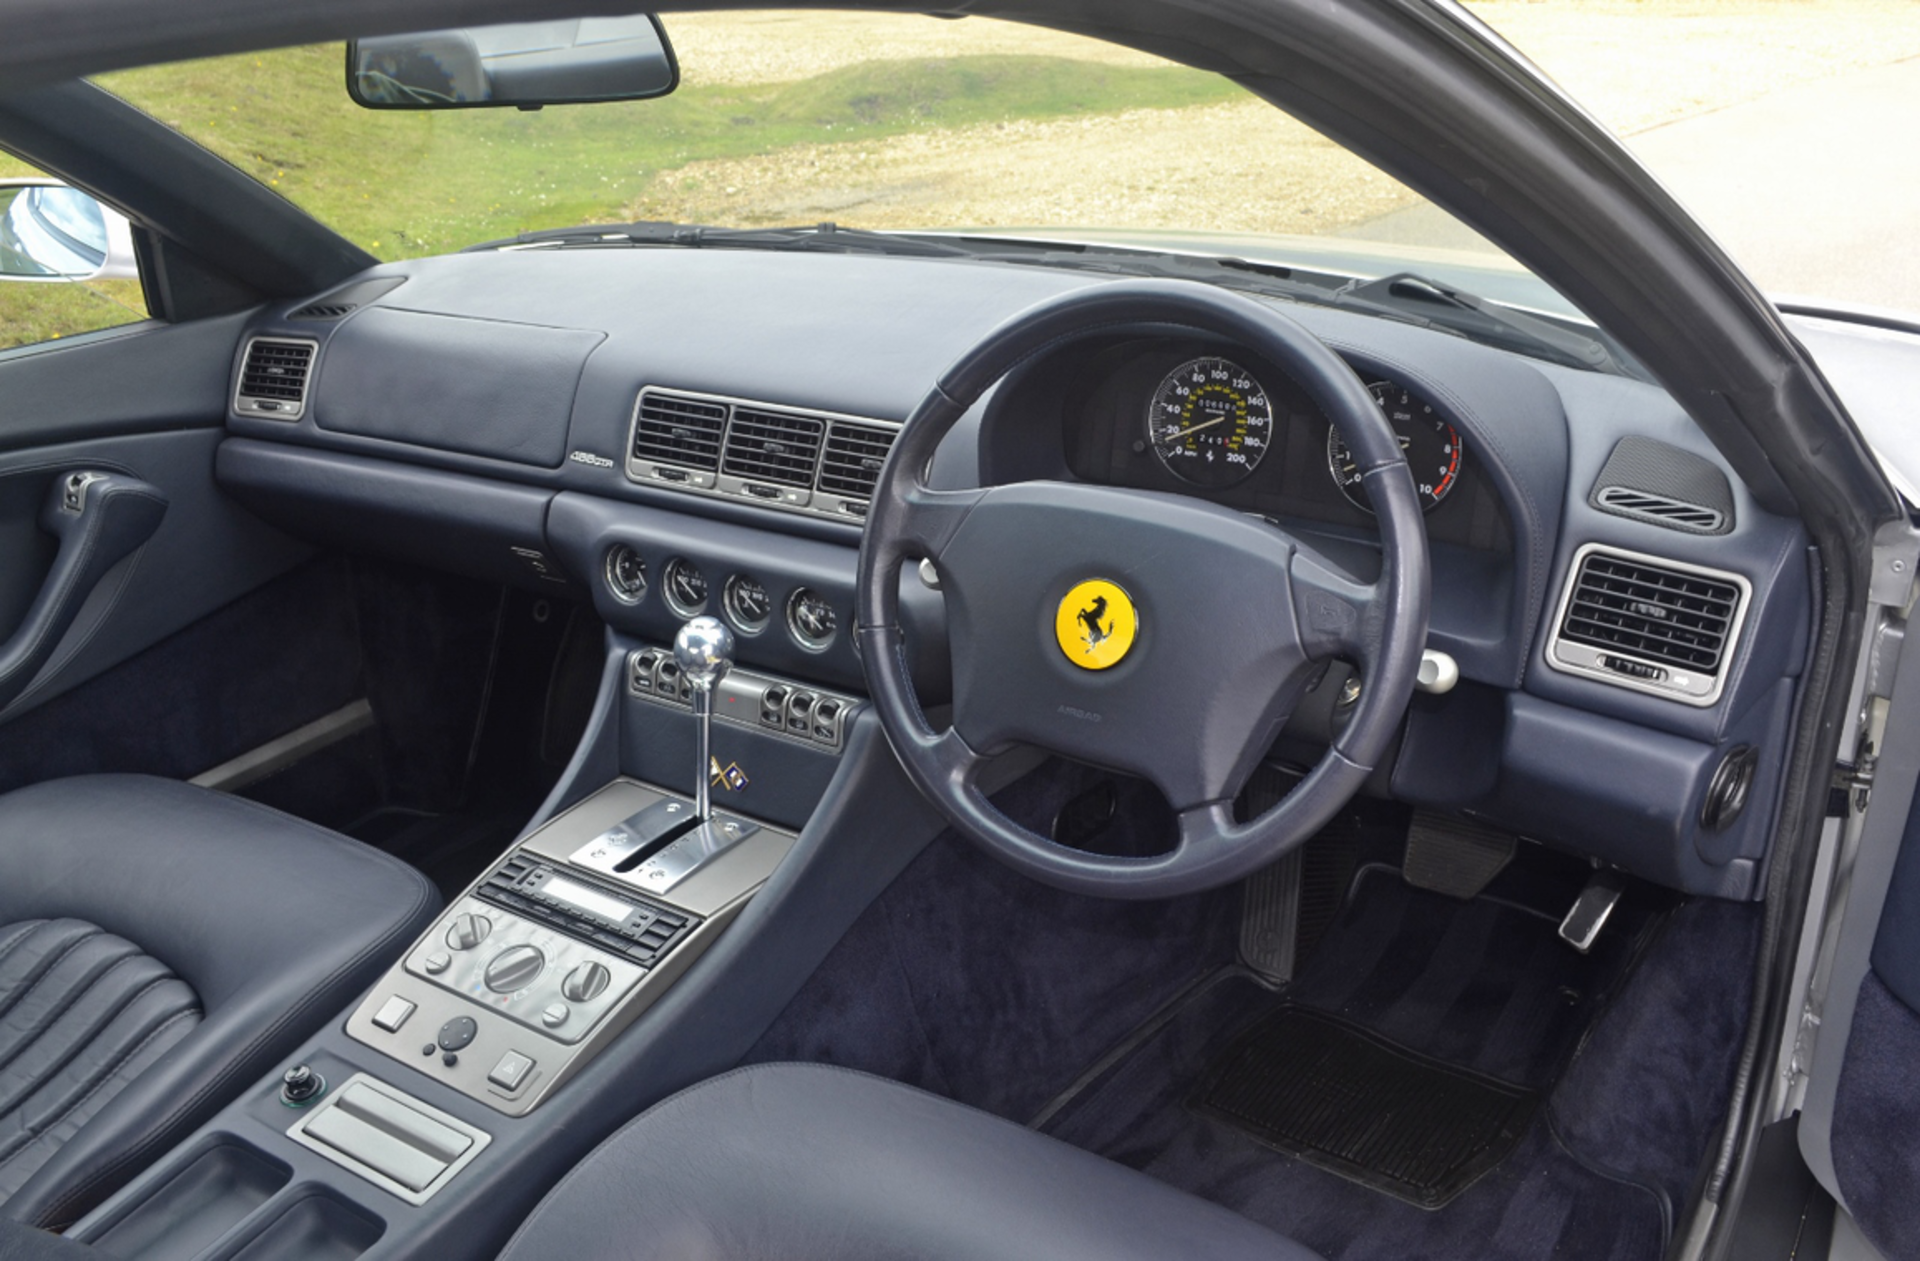 Ferrari 456 GTA - Image 12 of 19